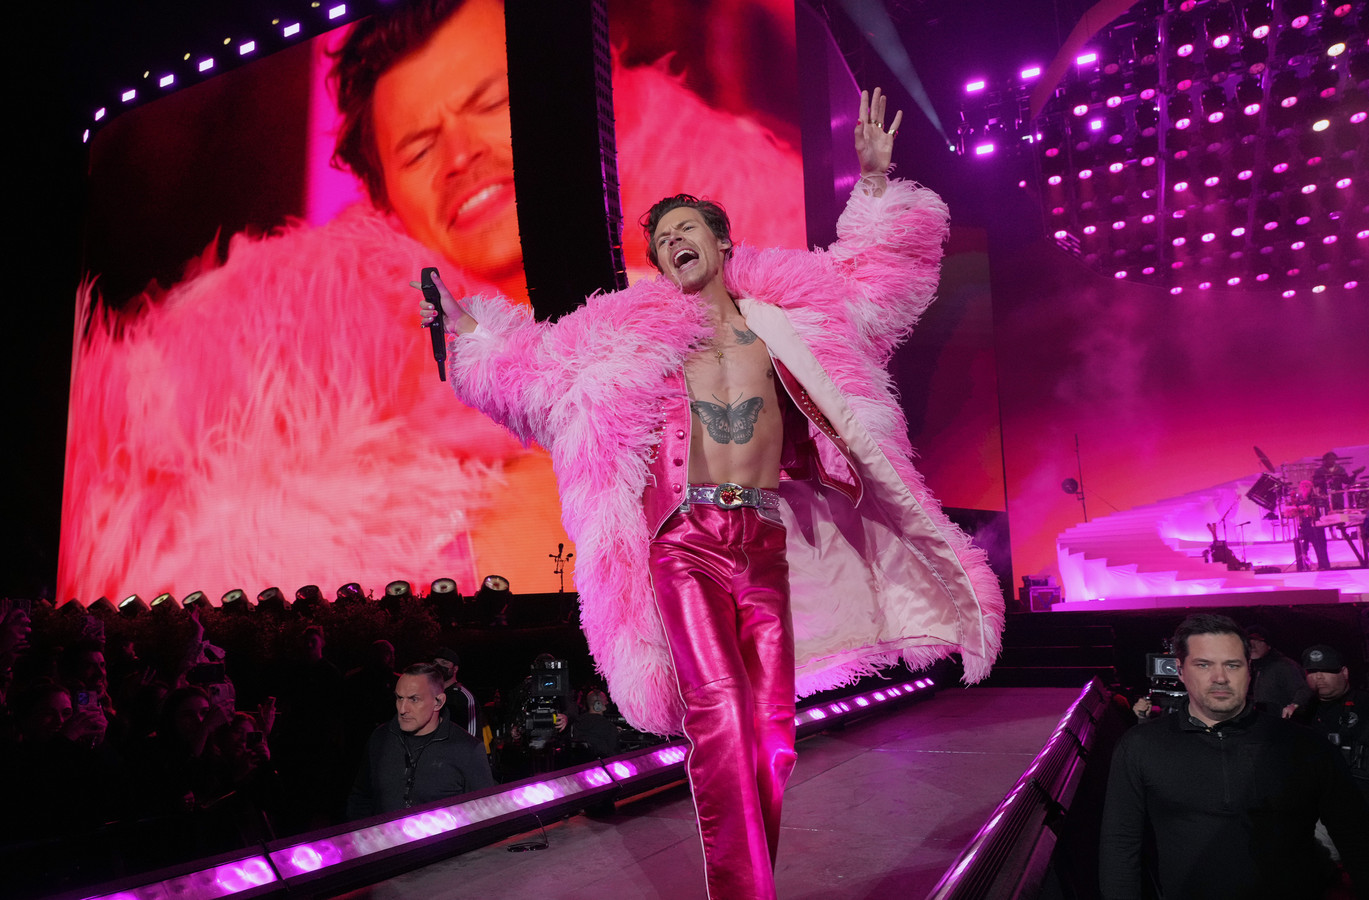 feit Overeenstemming Integratie Van gelakte nagels tot fluffy roze jas: de excentrieke outfits van  wereldster Harry Styles | Foto | hln.be